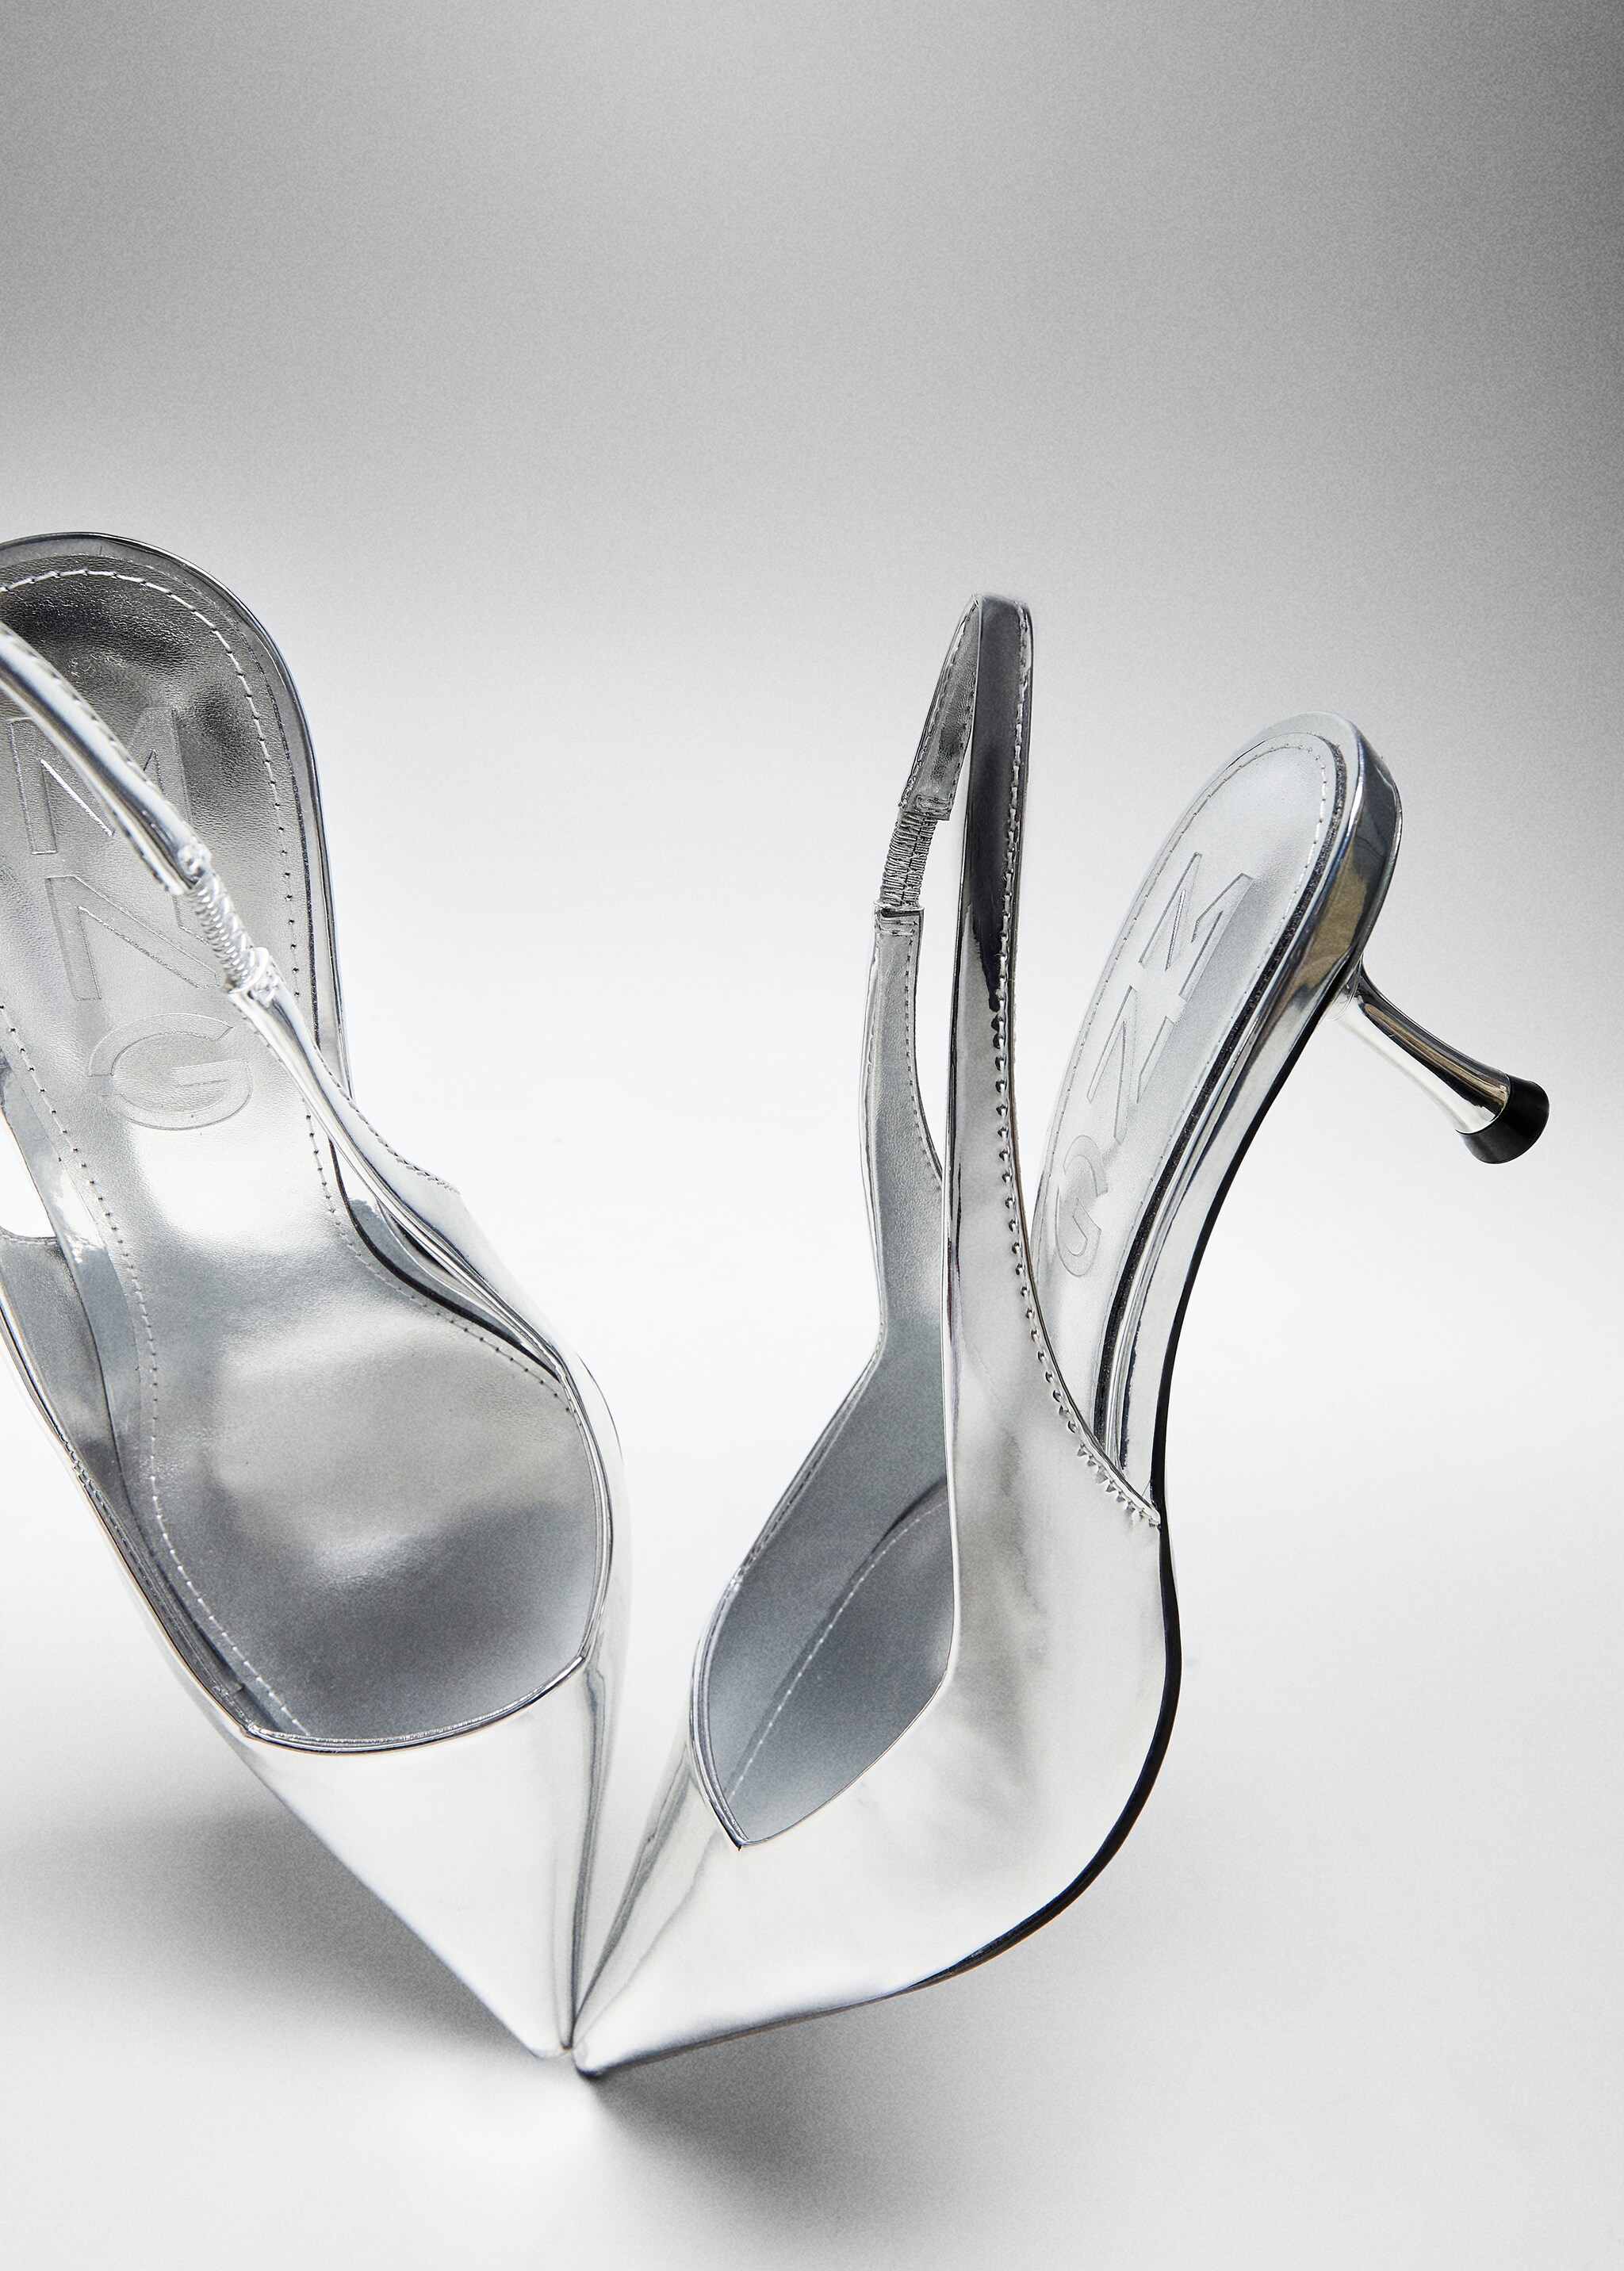 Metallic heel shoes - Details of the article 5